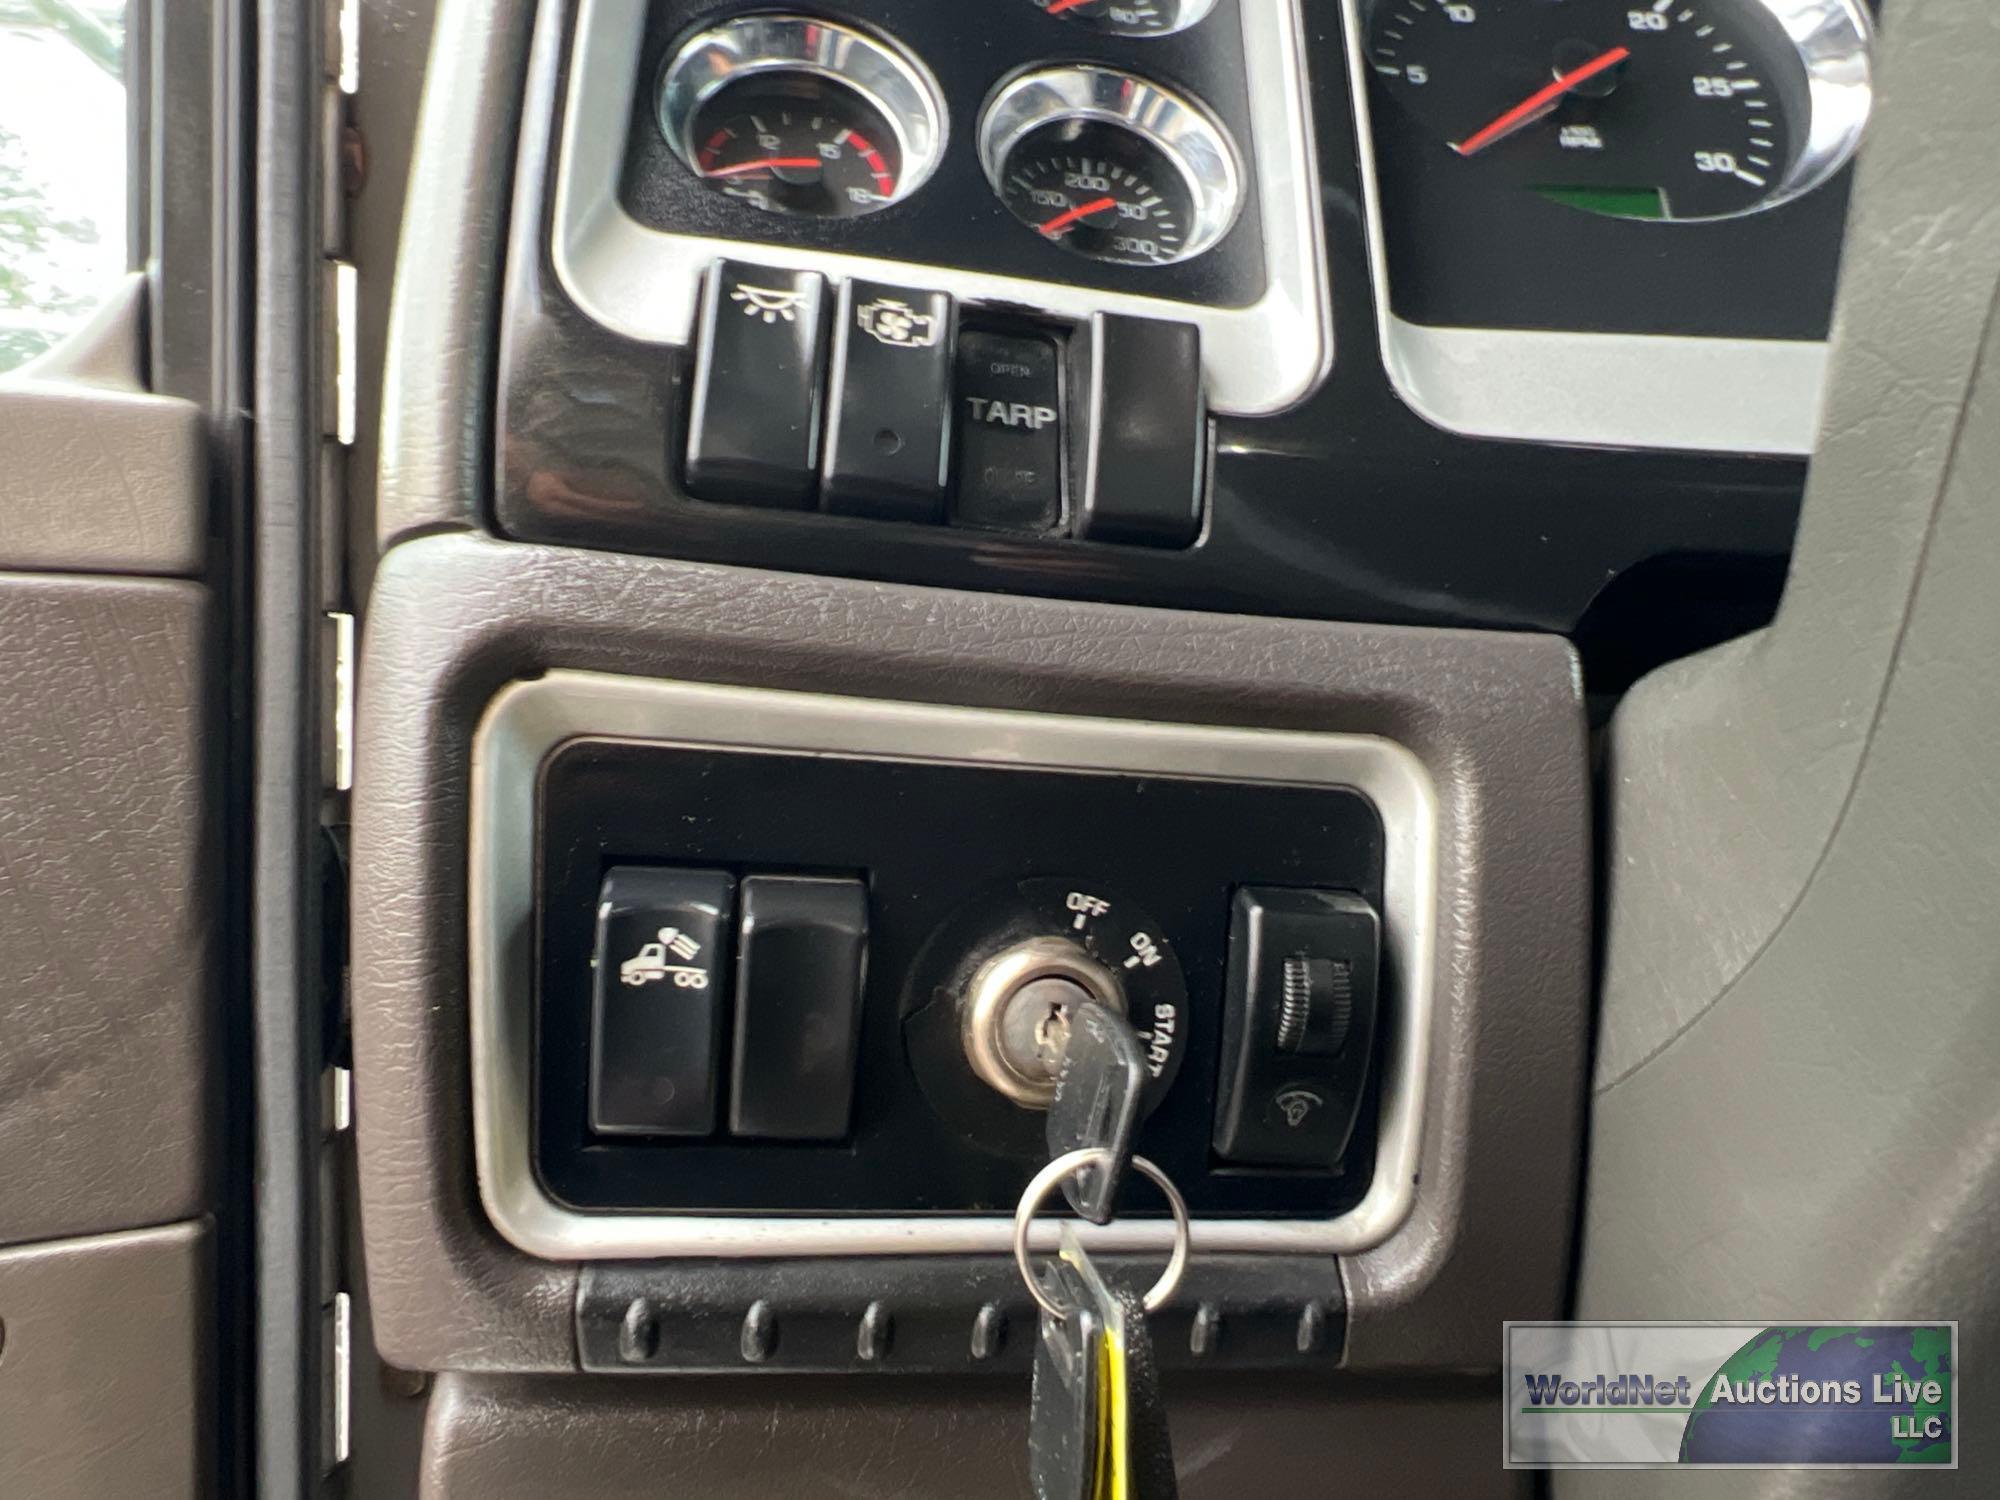 2015 KENWORTH W900 DAY CAB ROAD TRACTOR, VIN # 1XKWDP0X6FR458171